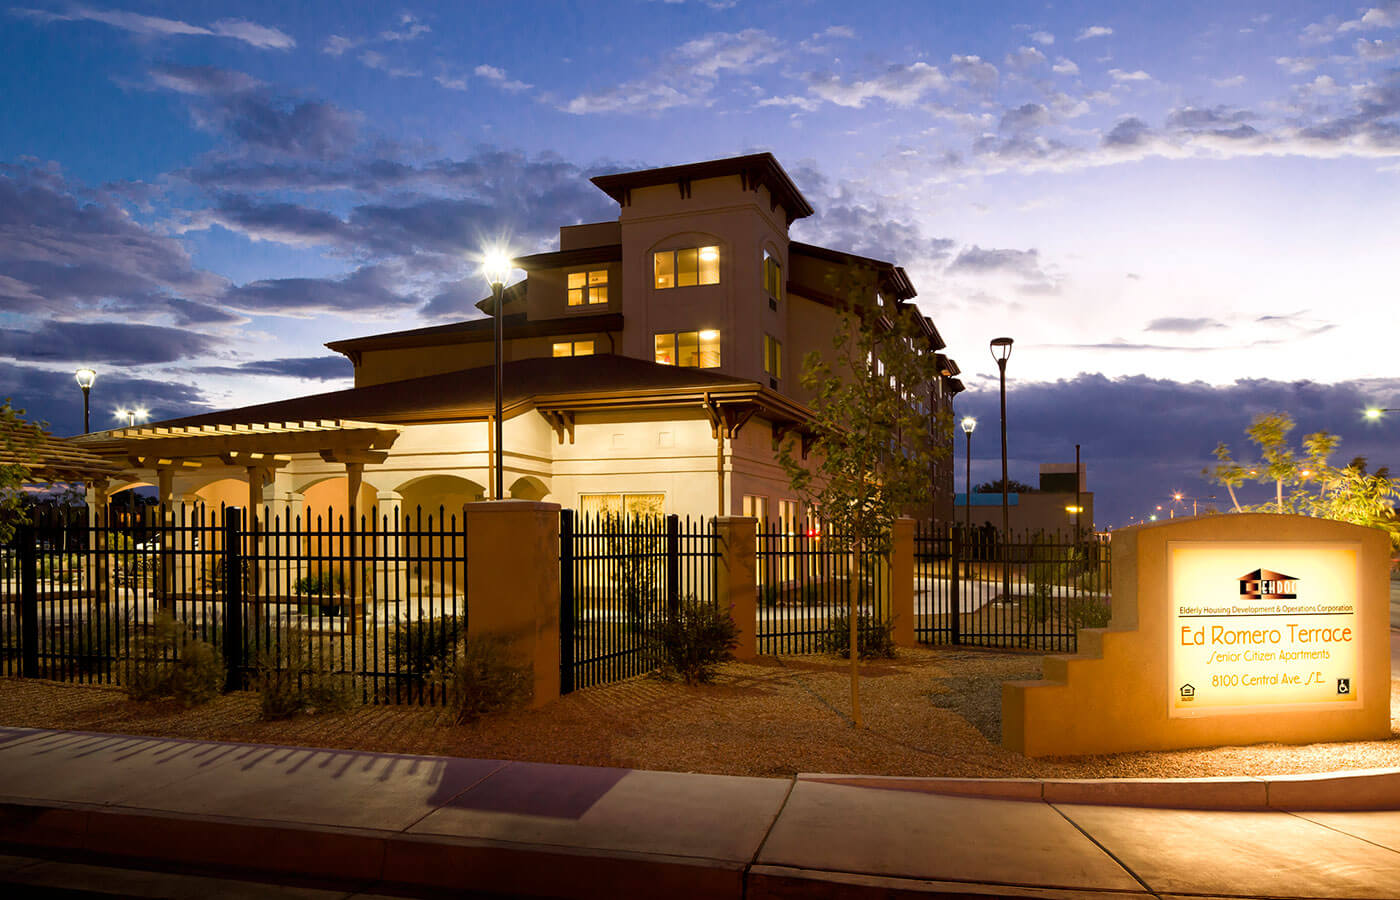 Edward Romero Terrace - Housing For Seniors Albuquerque NM